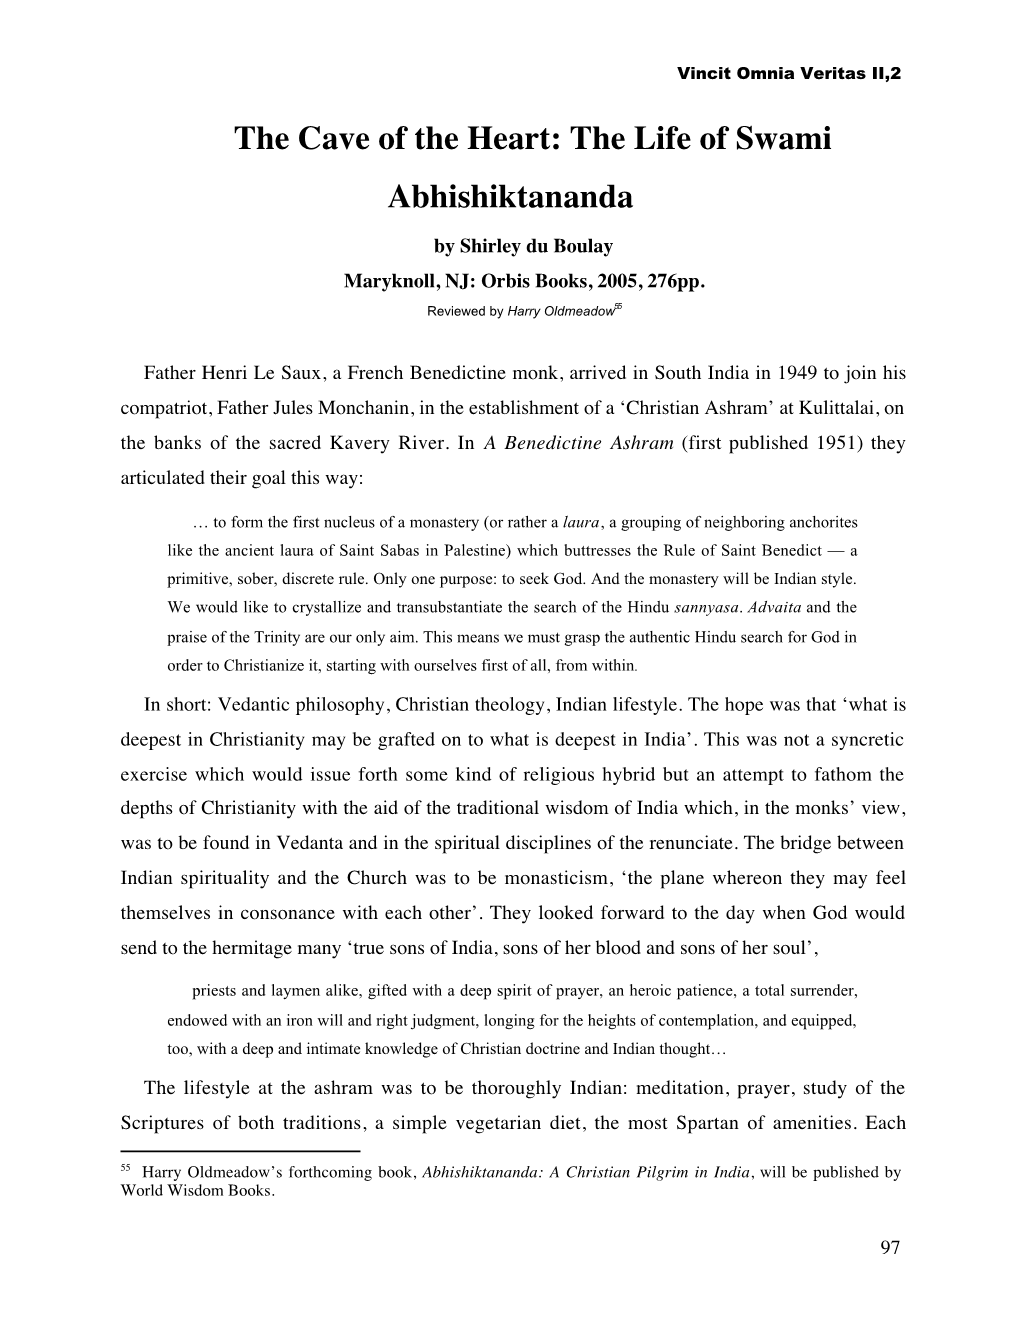 The Cave of the Heart: the Life of Swami Abhishiktananda